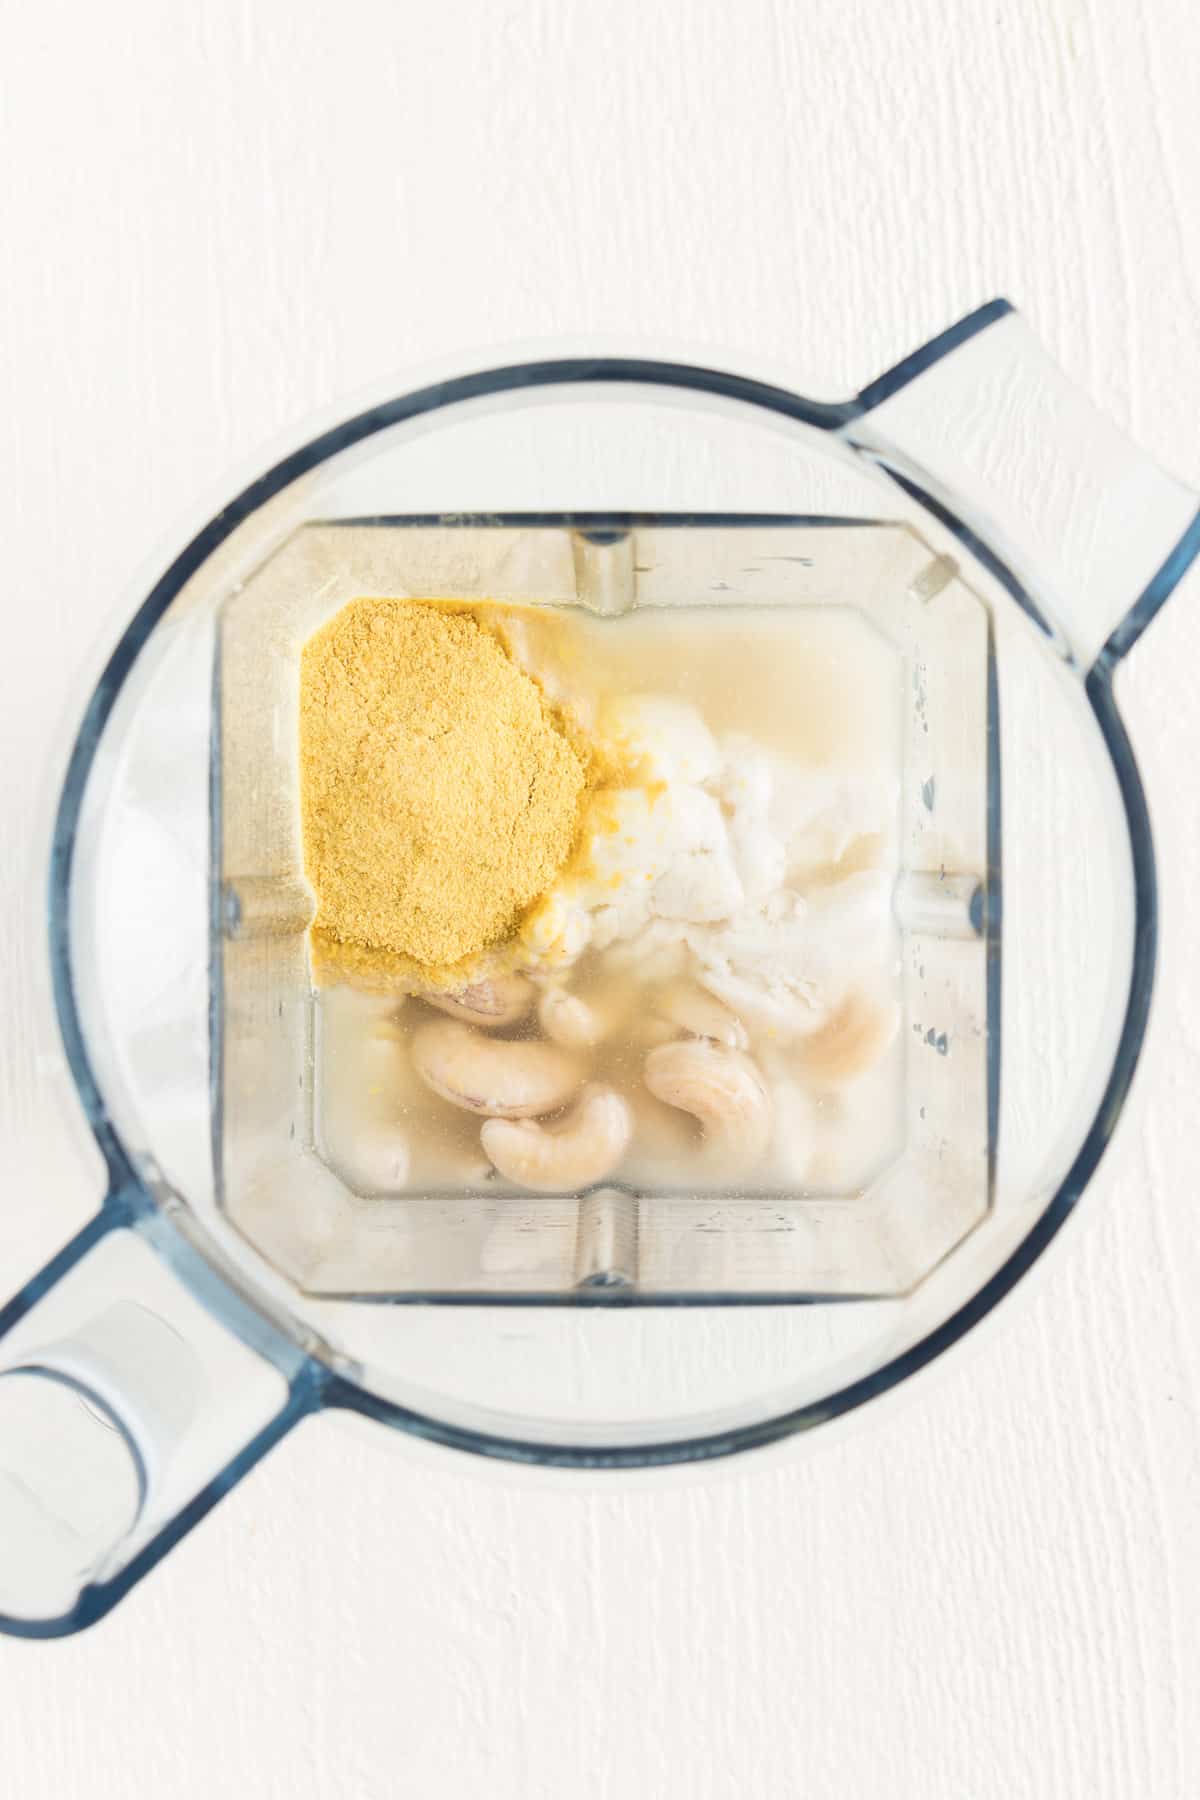 water, nutritional yeast, nondairy yogurt, and cashews inside a vitamix blender